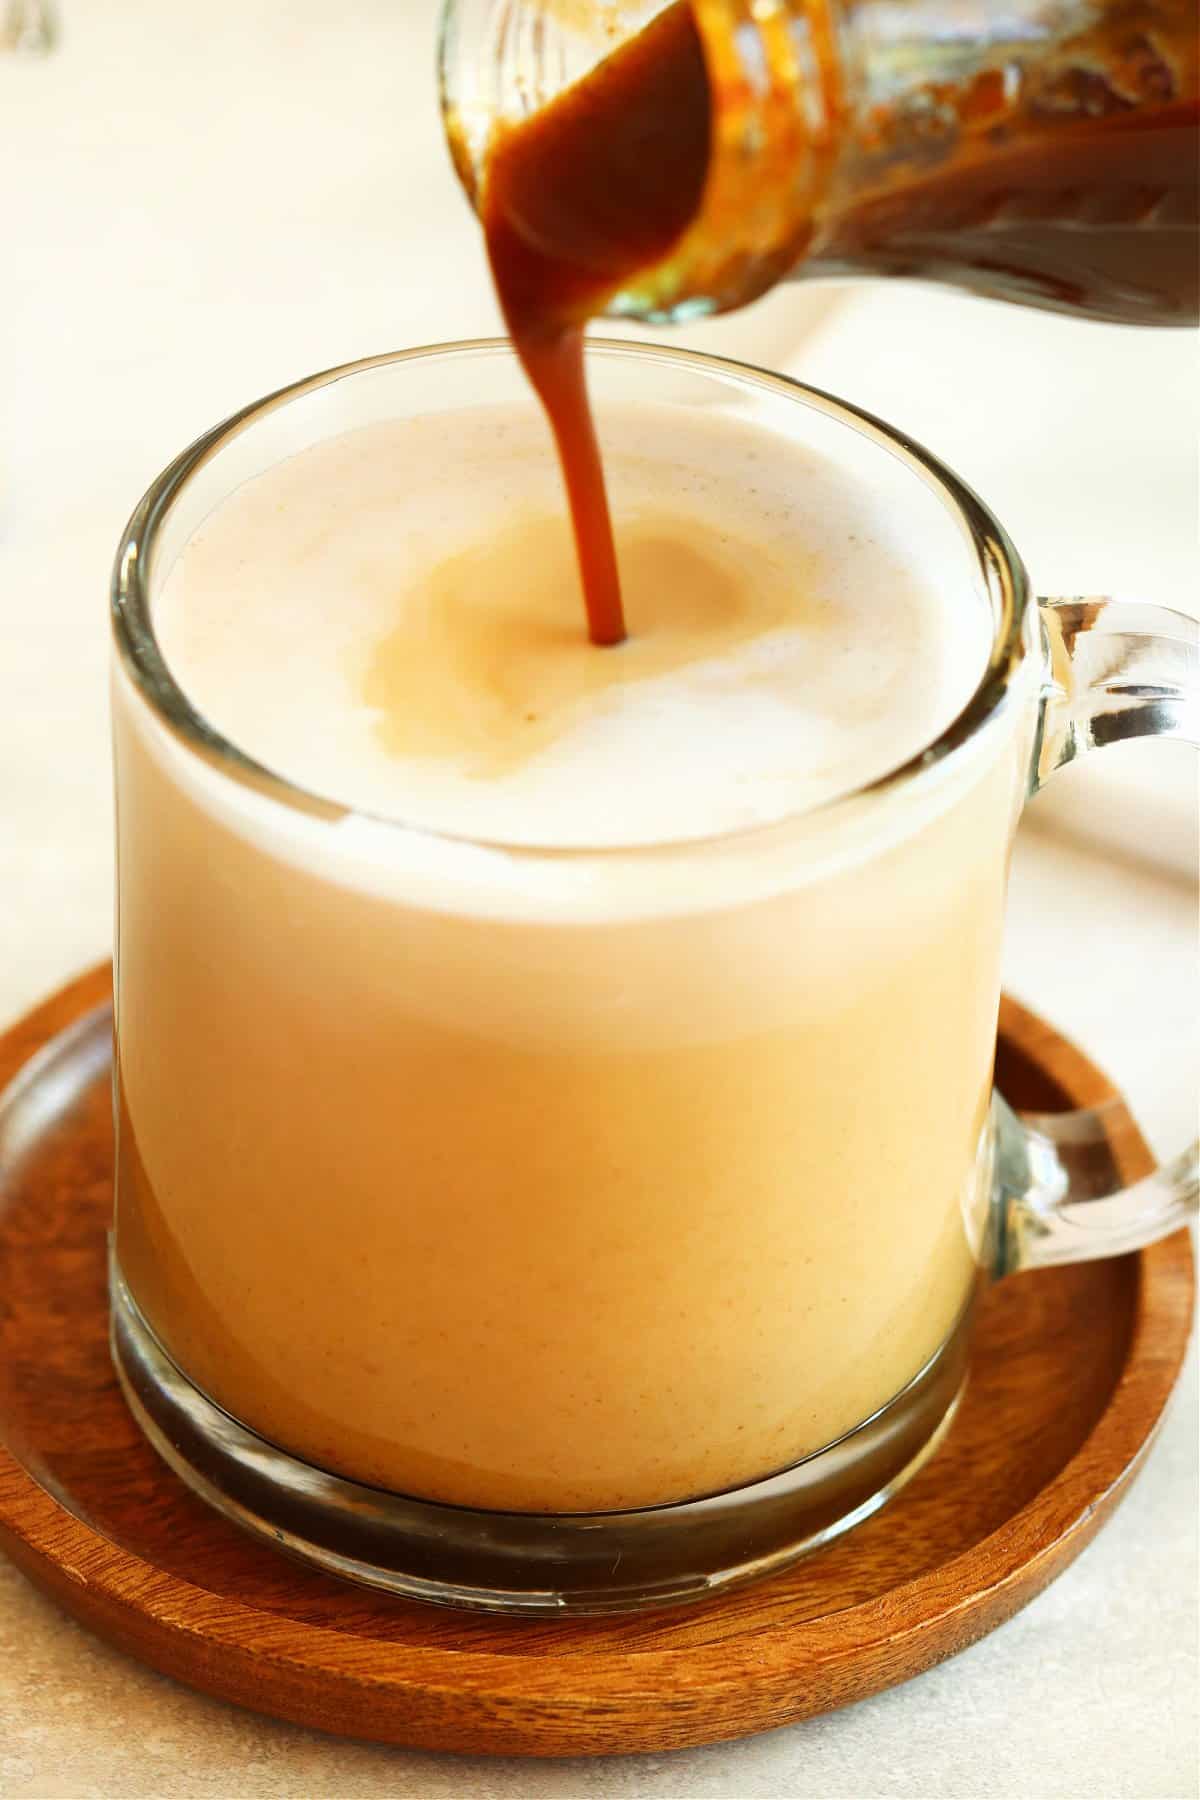 Pumpkin syrup poured into a glass mug with coffee.